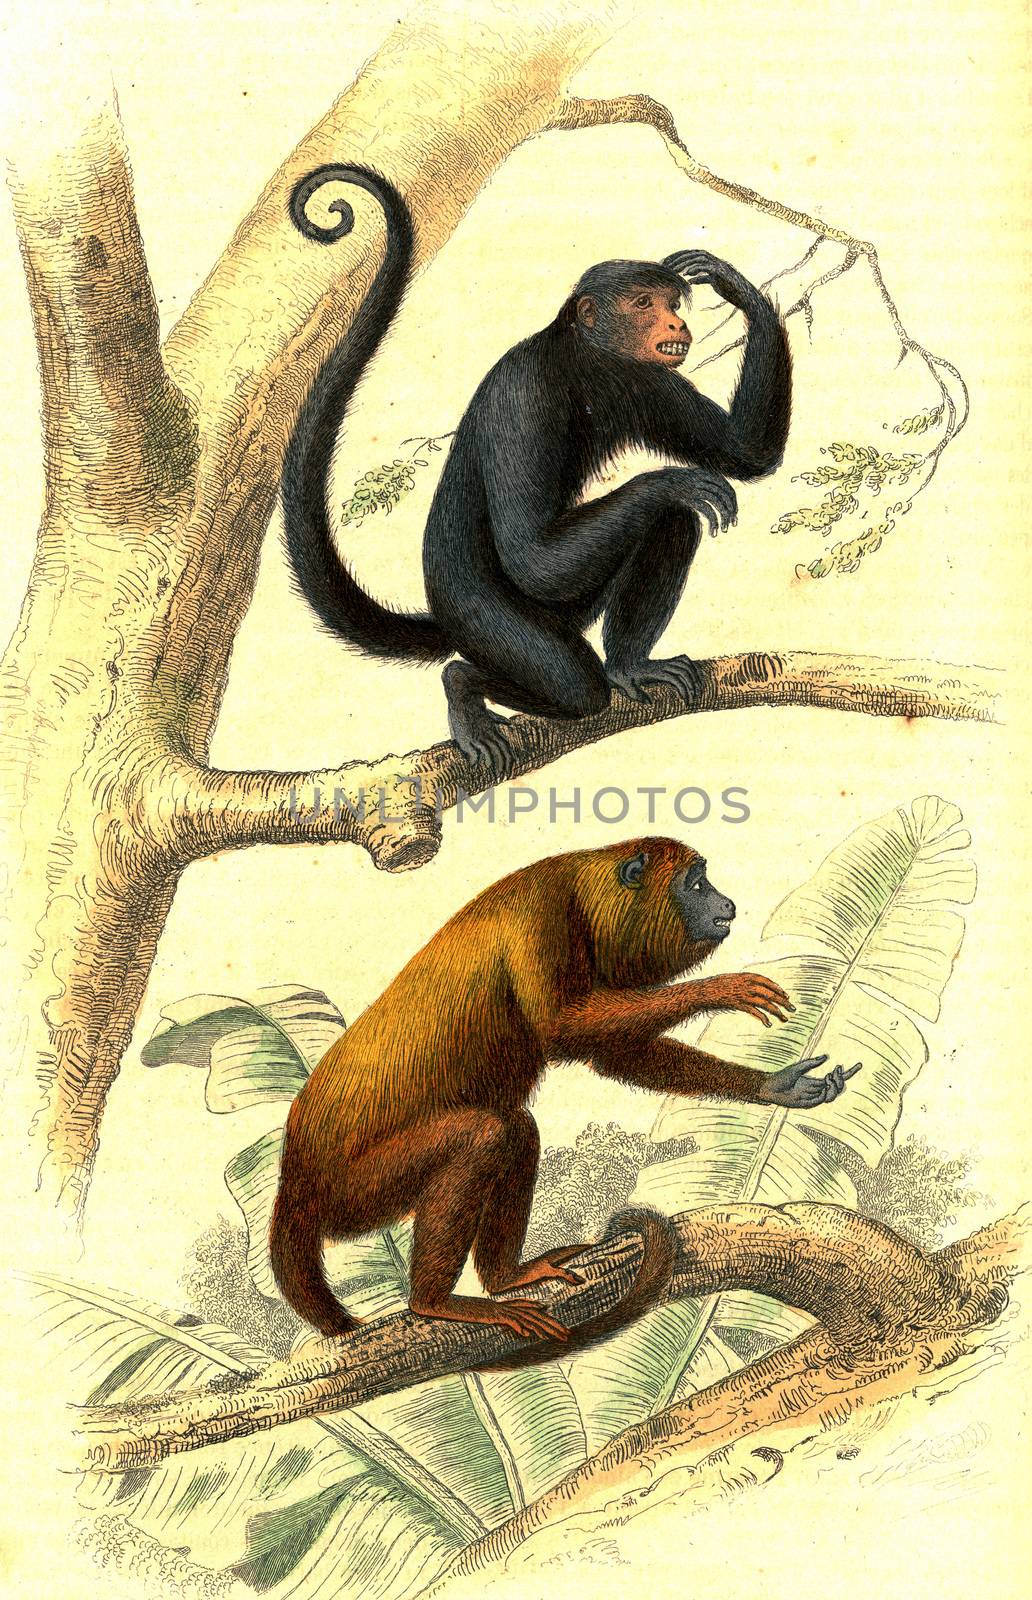 The Coaita, Howler monkeys, vintage engraving. by Morphart